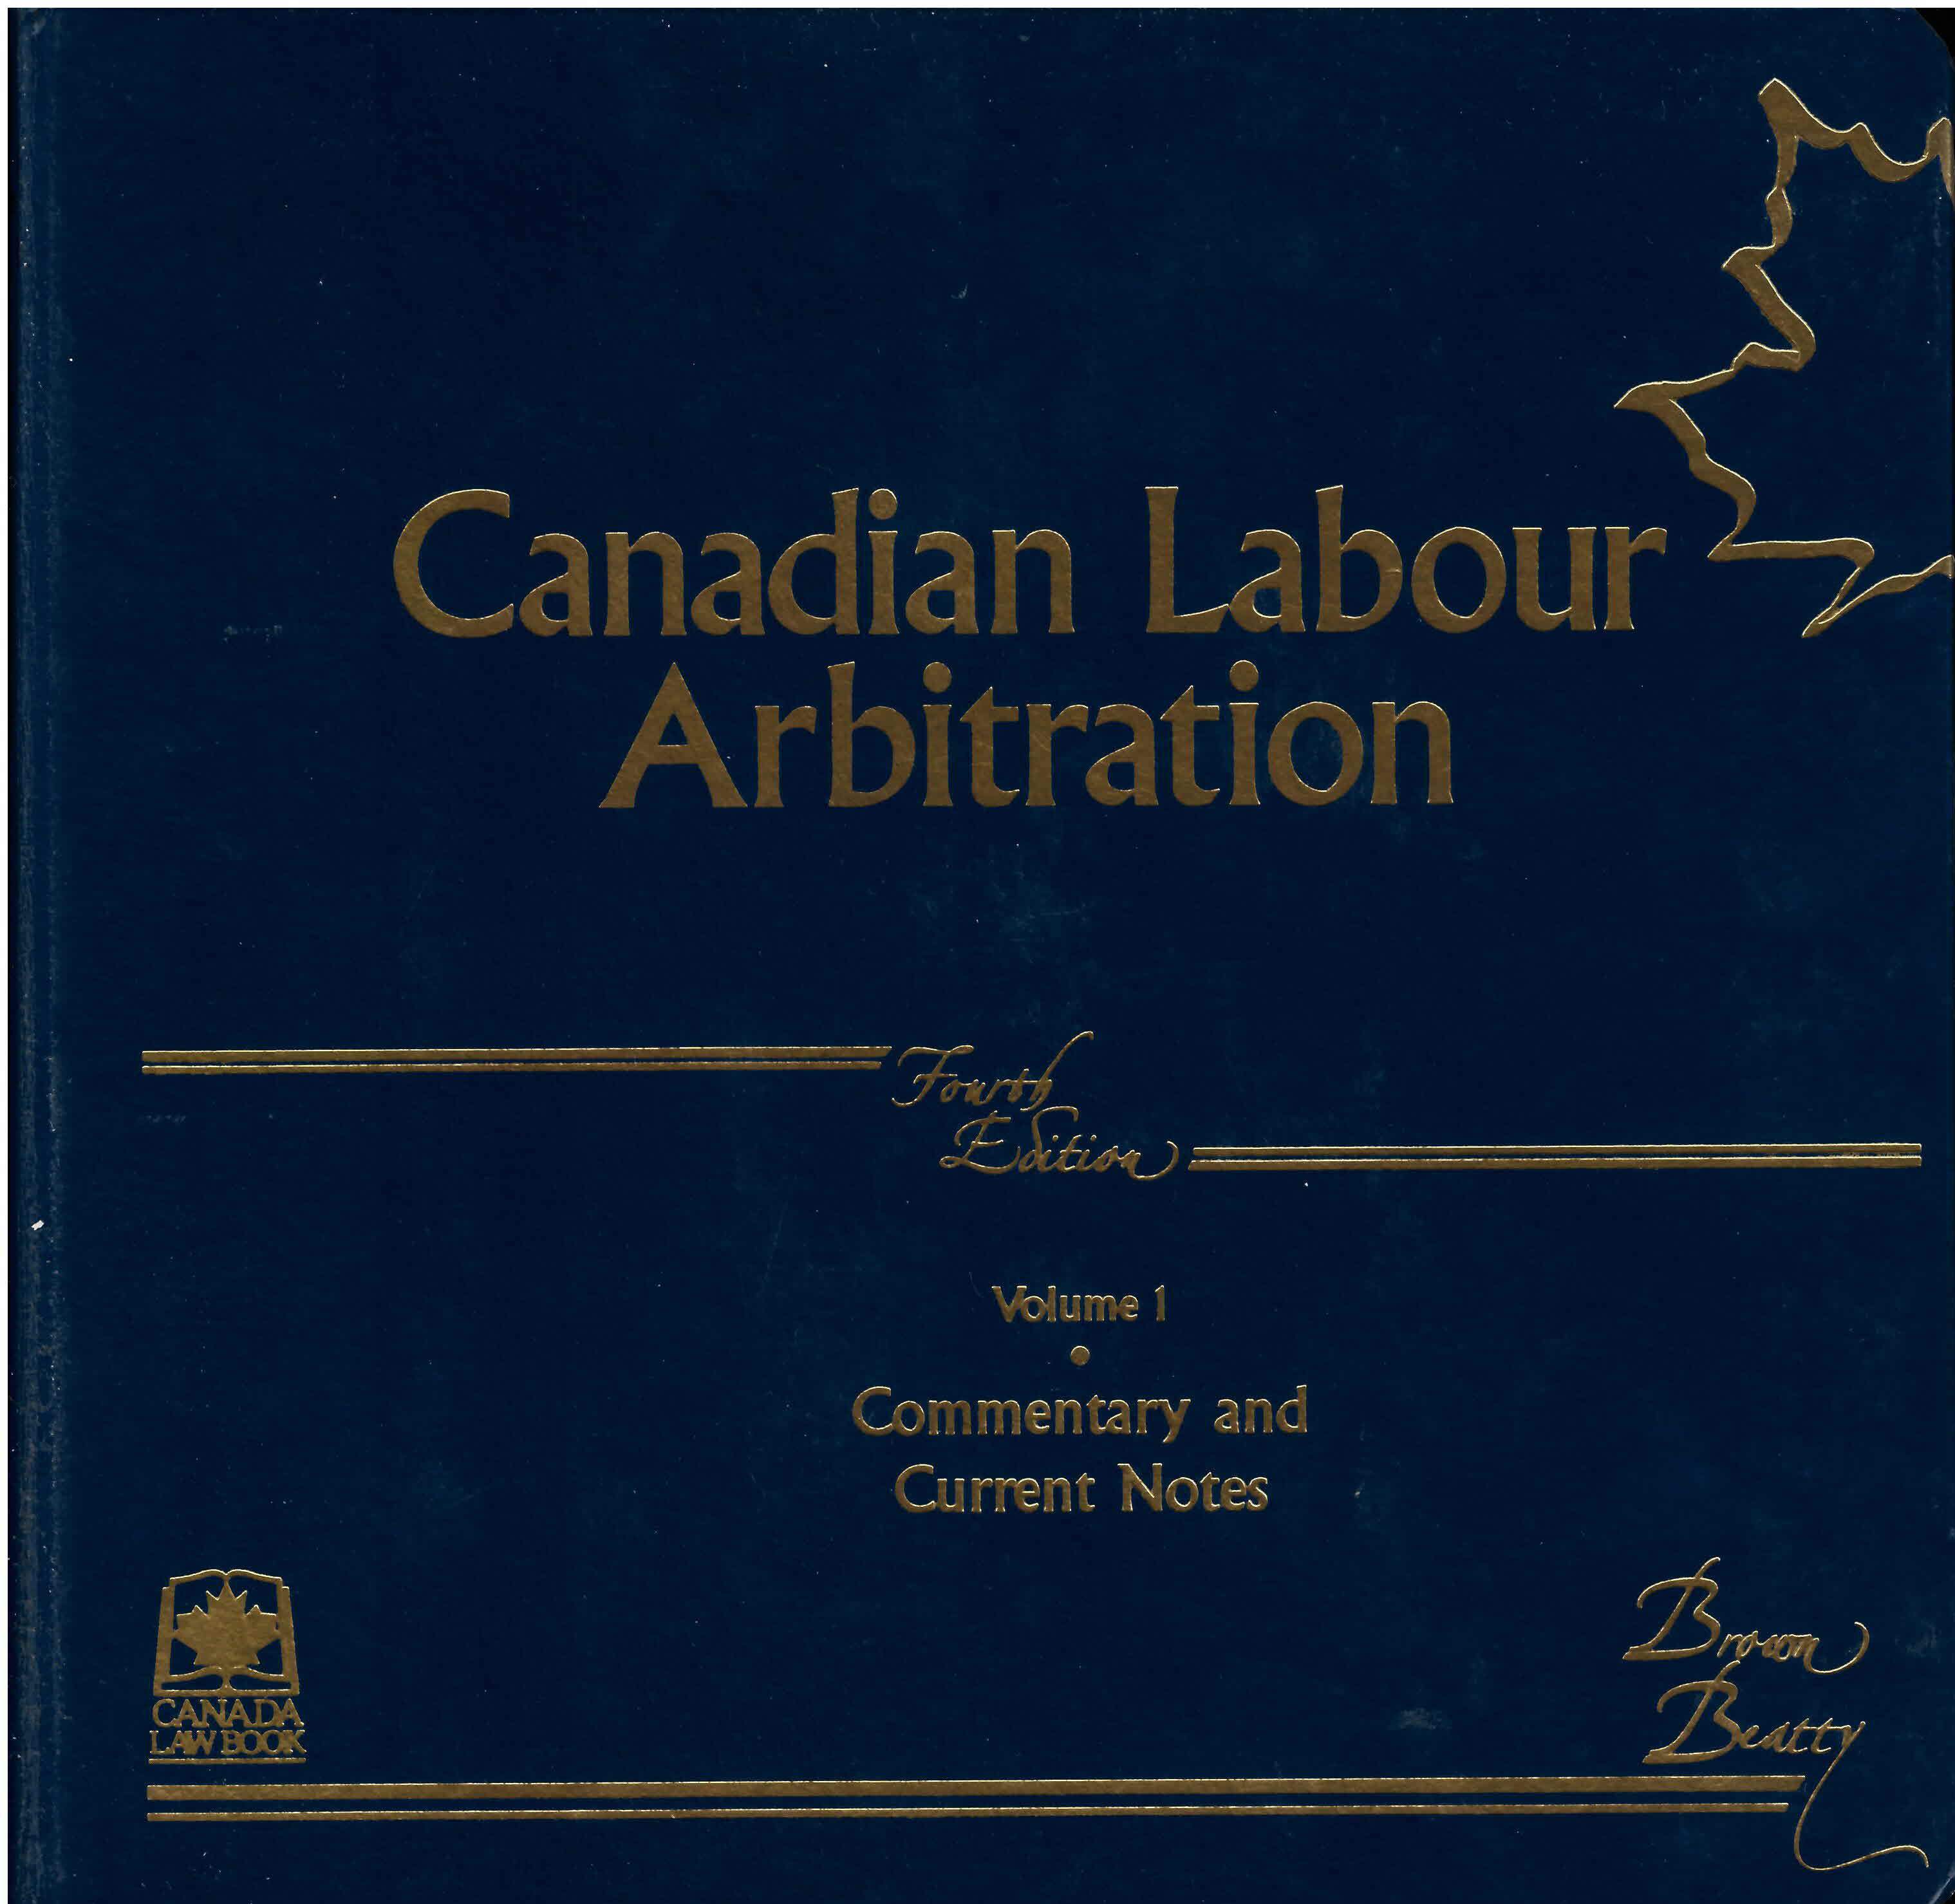 Canadian labour arbitration